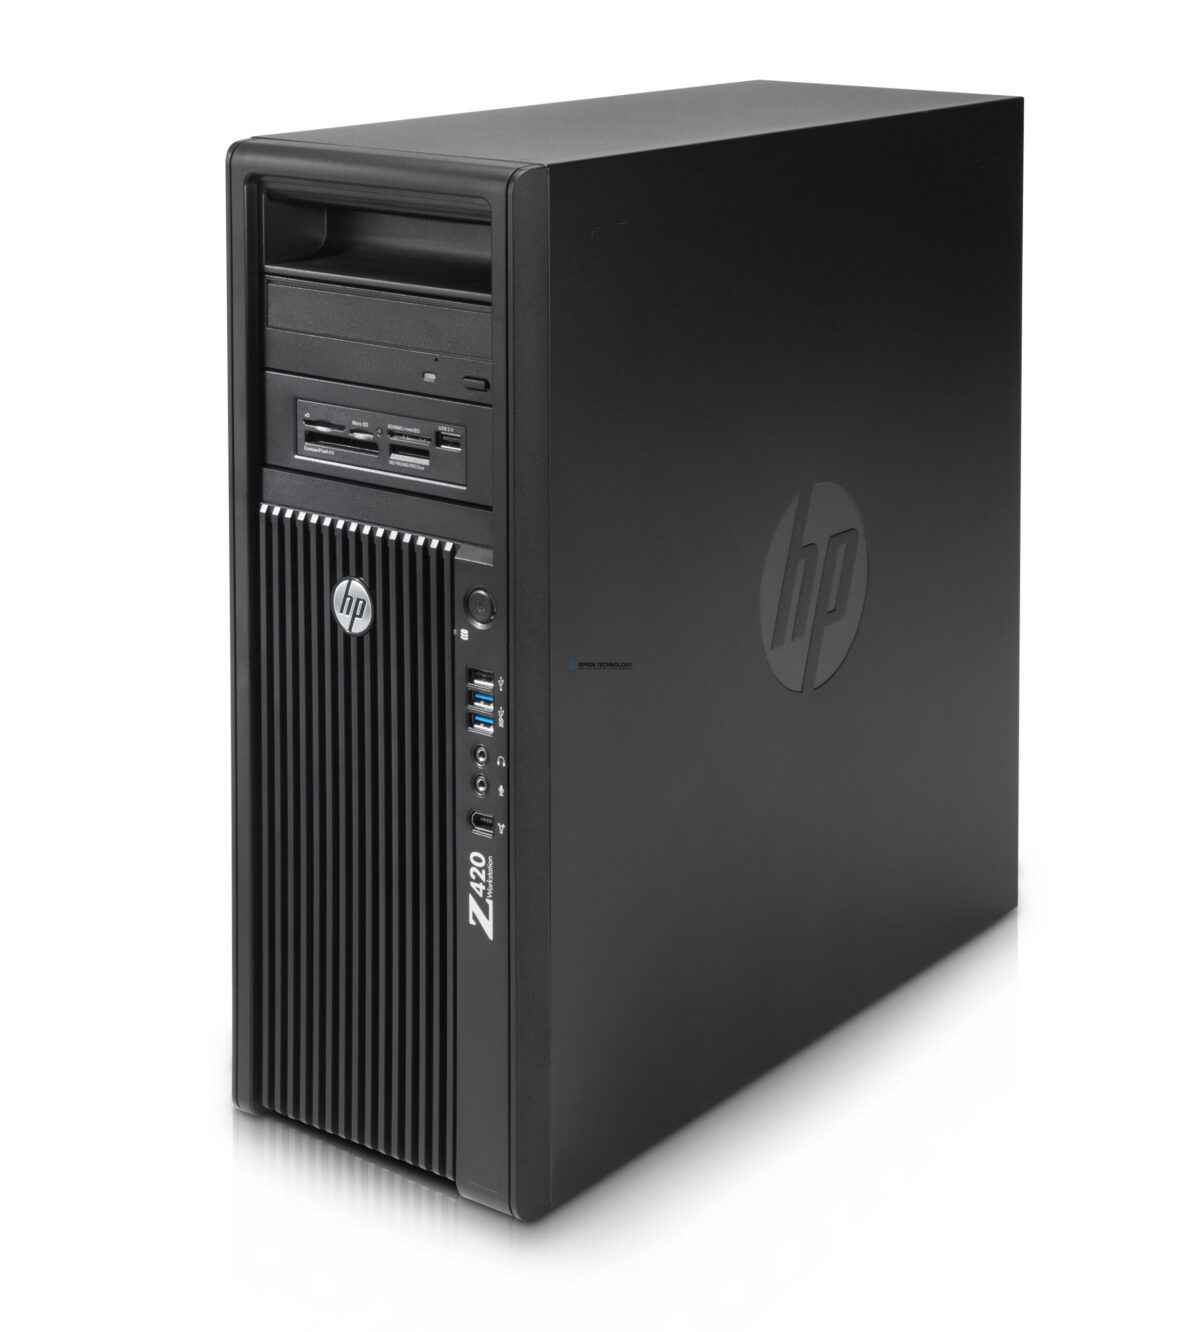 Рабочая станция HP Z420 Tower E5-1650v2/32GB/300GB HDD/Quadro K4000/WIN10PRO (HP Z420 Tower E5-1650v2/32GB/300GB HDD/Quadro K4000/WIN10PRO)